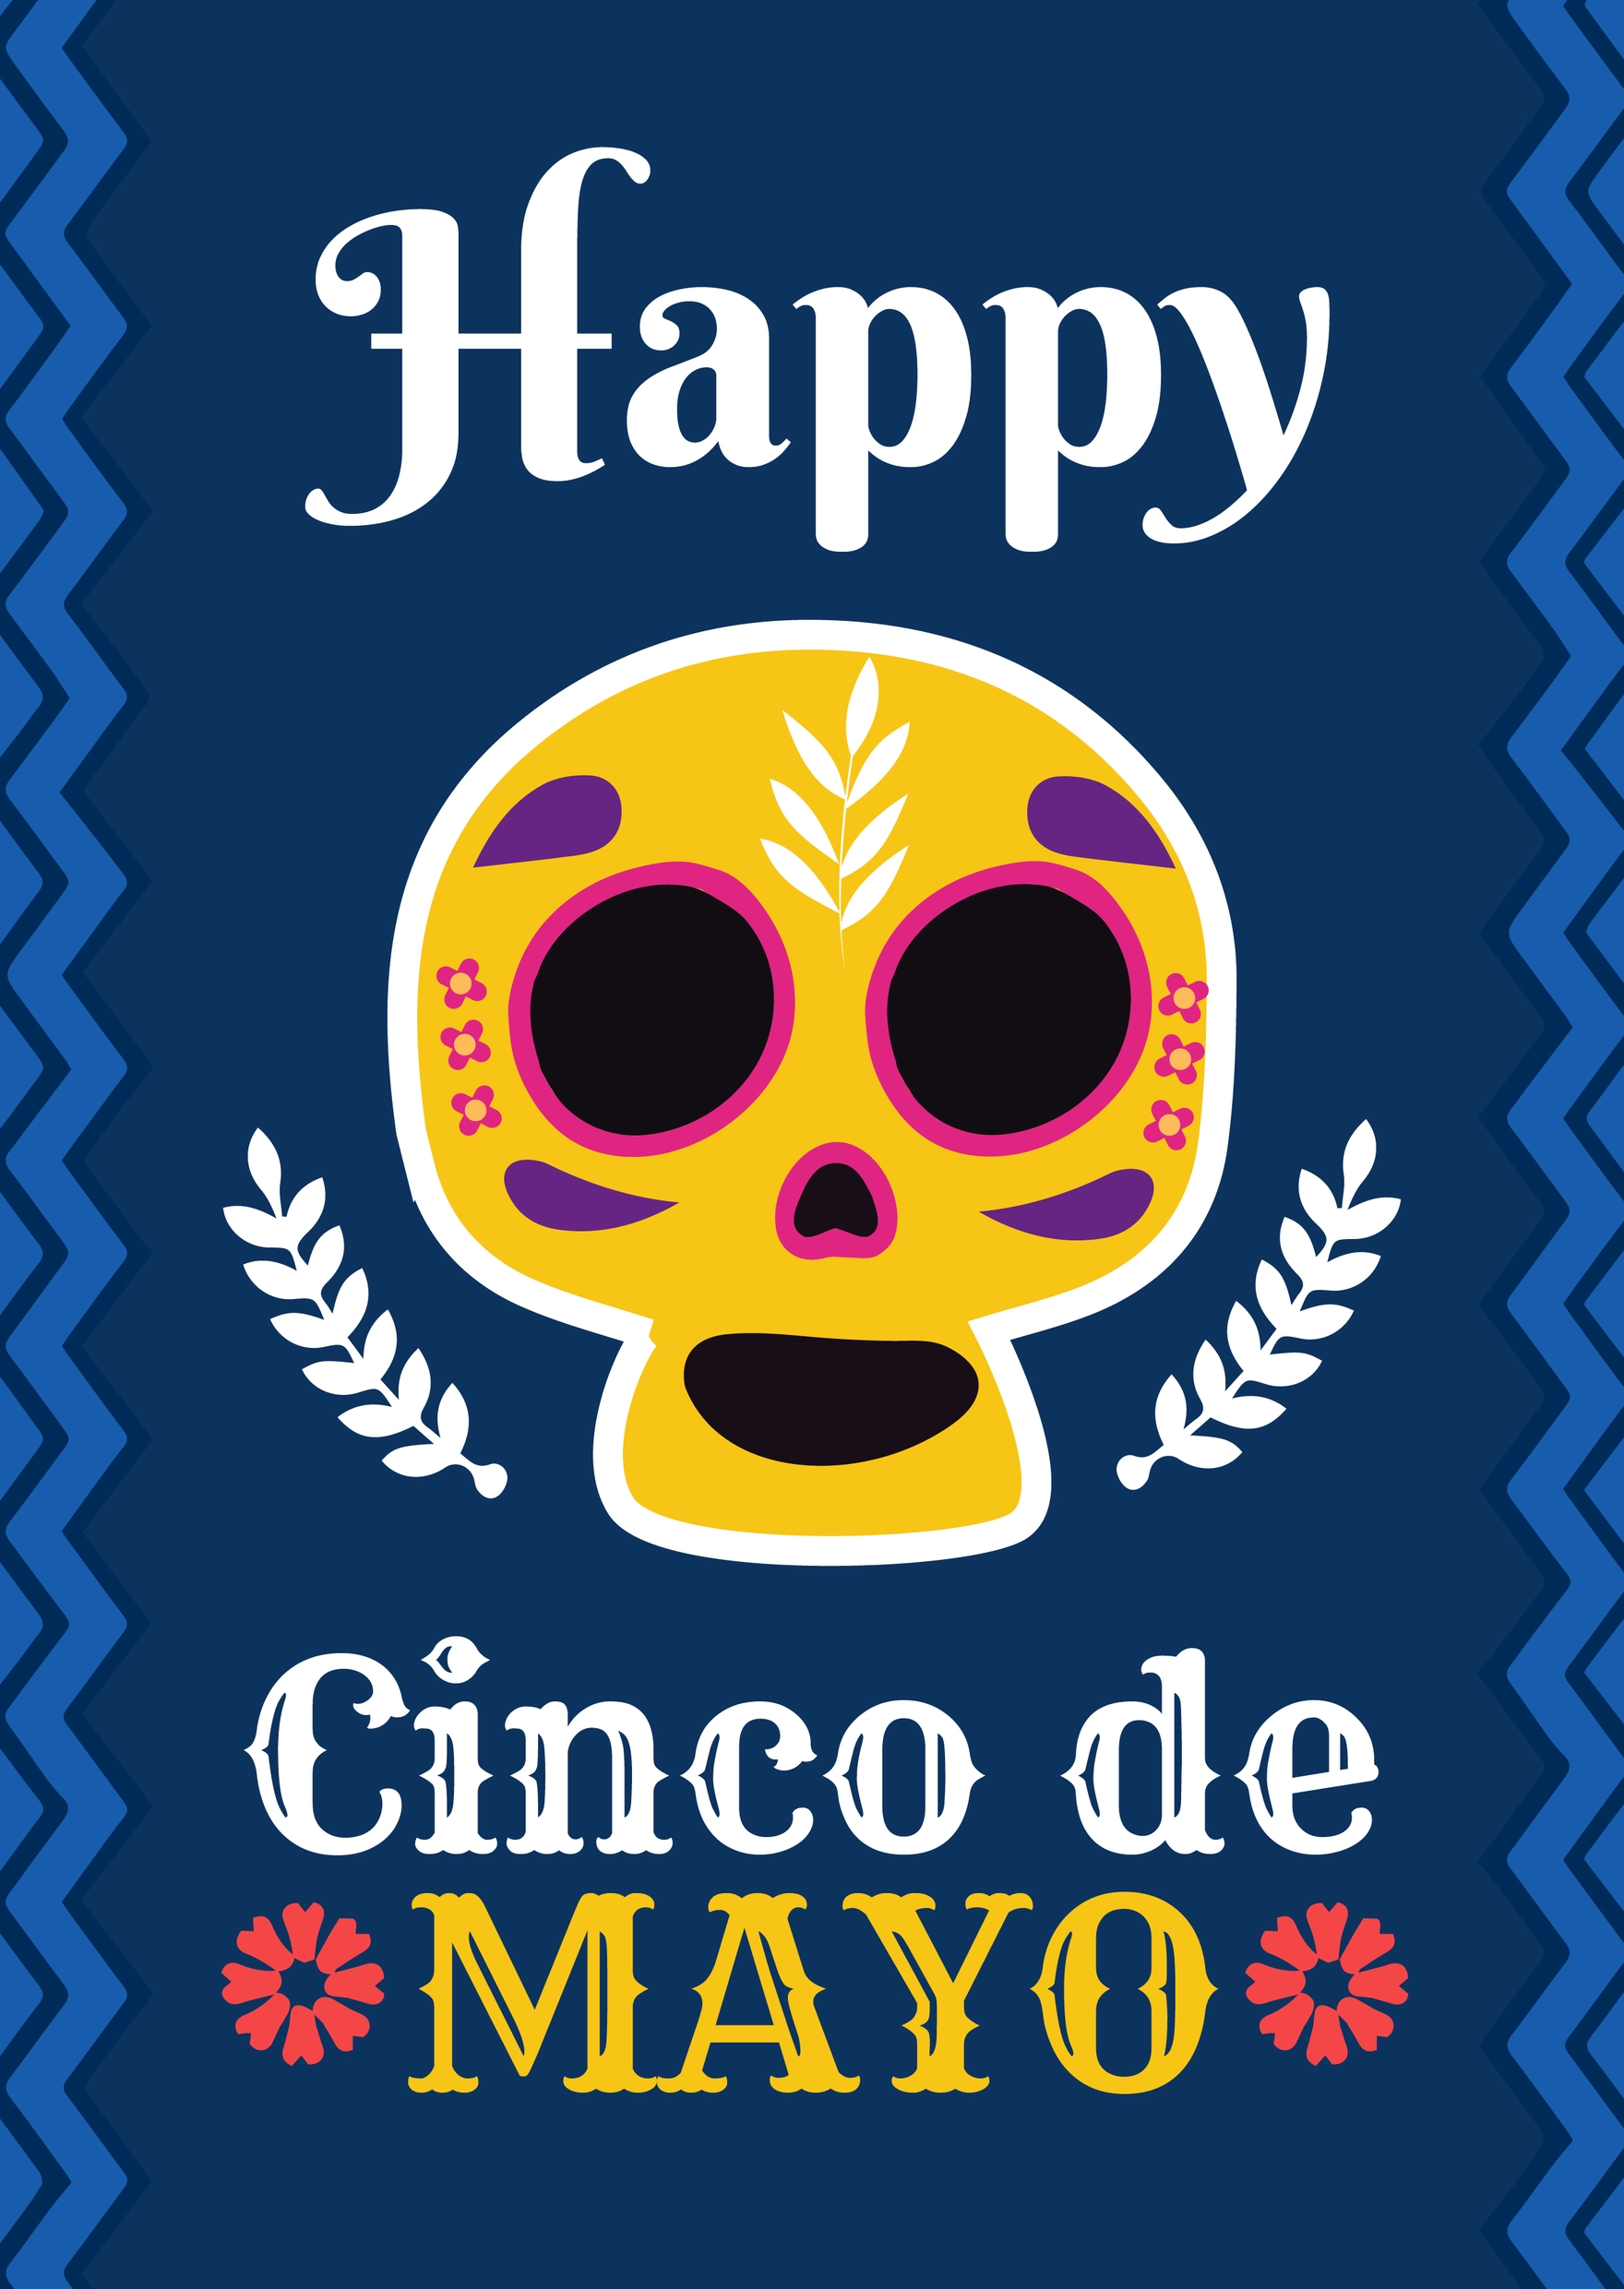 Free Happy Cinco De Mayo in Illustrator, EPS, SVG, JPG, PNG